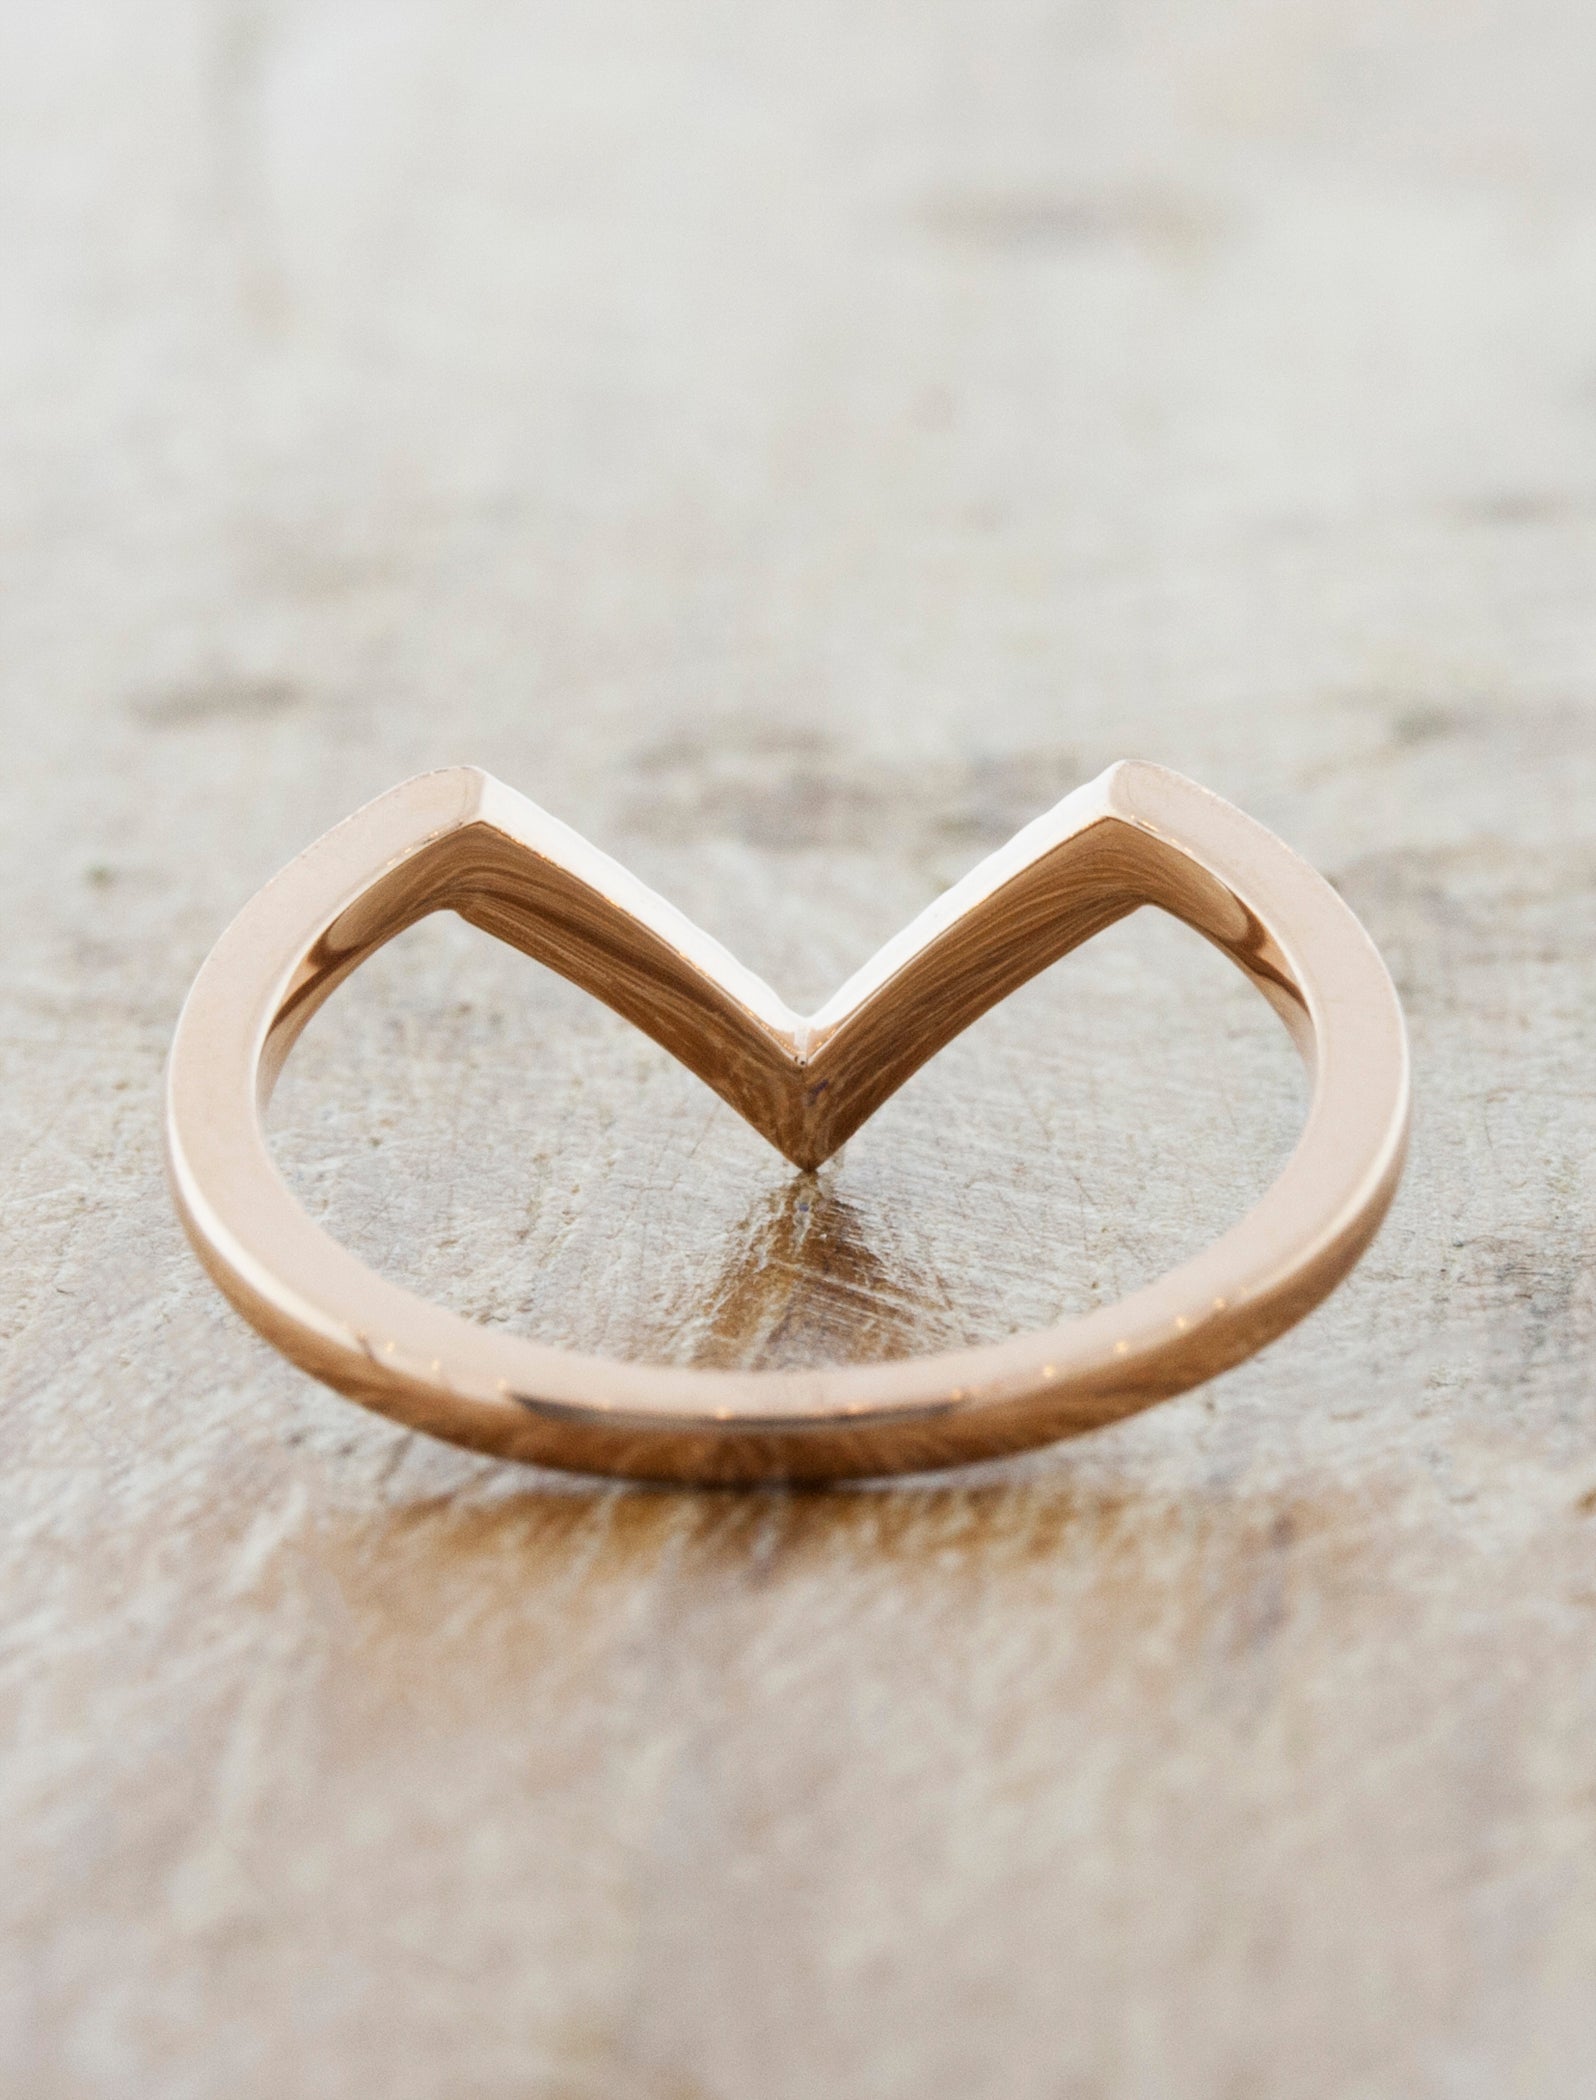 V - shaped wedding rings